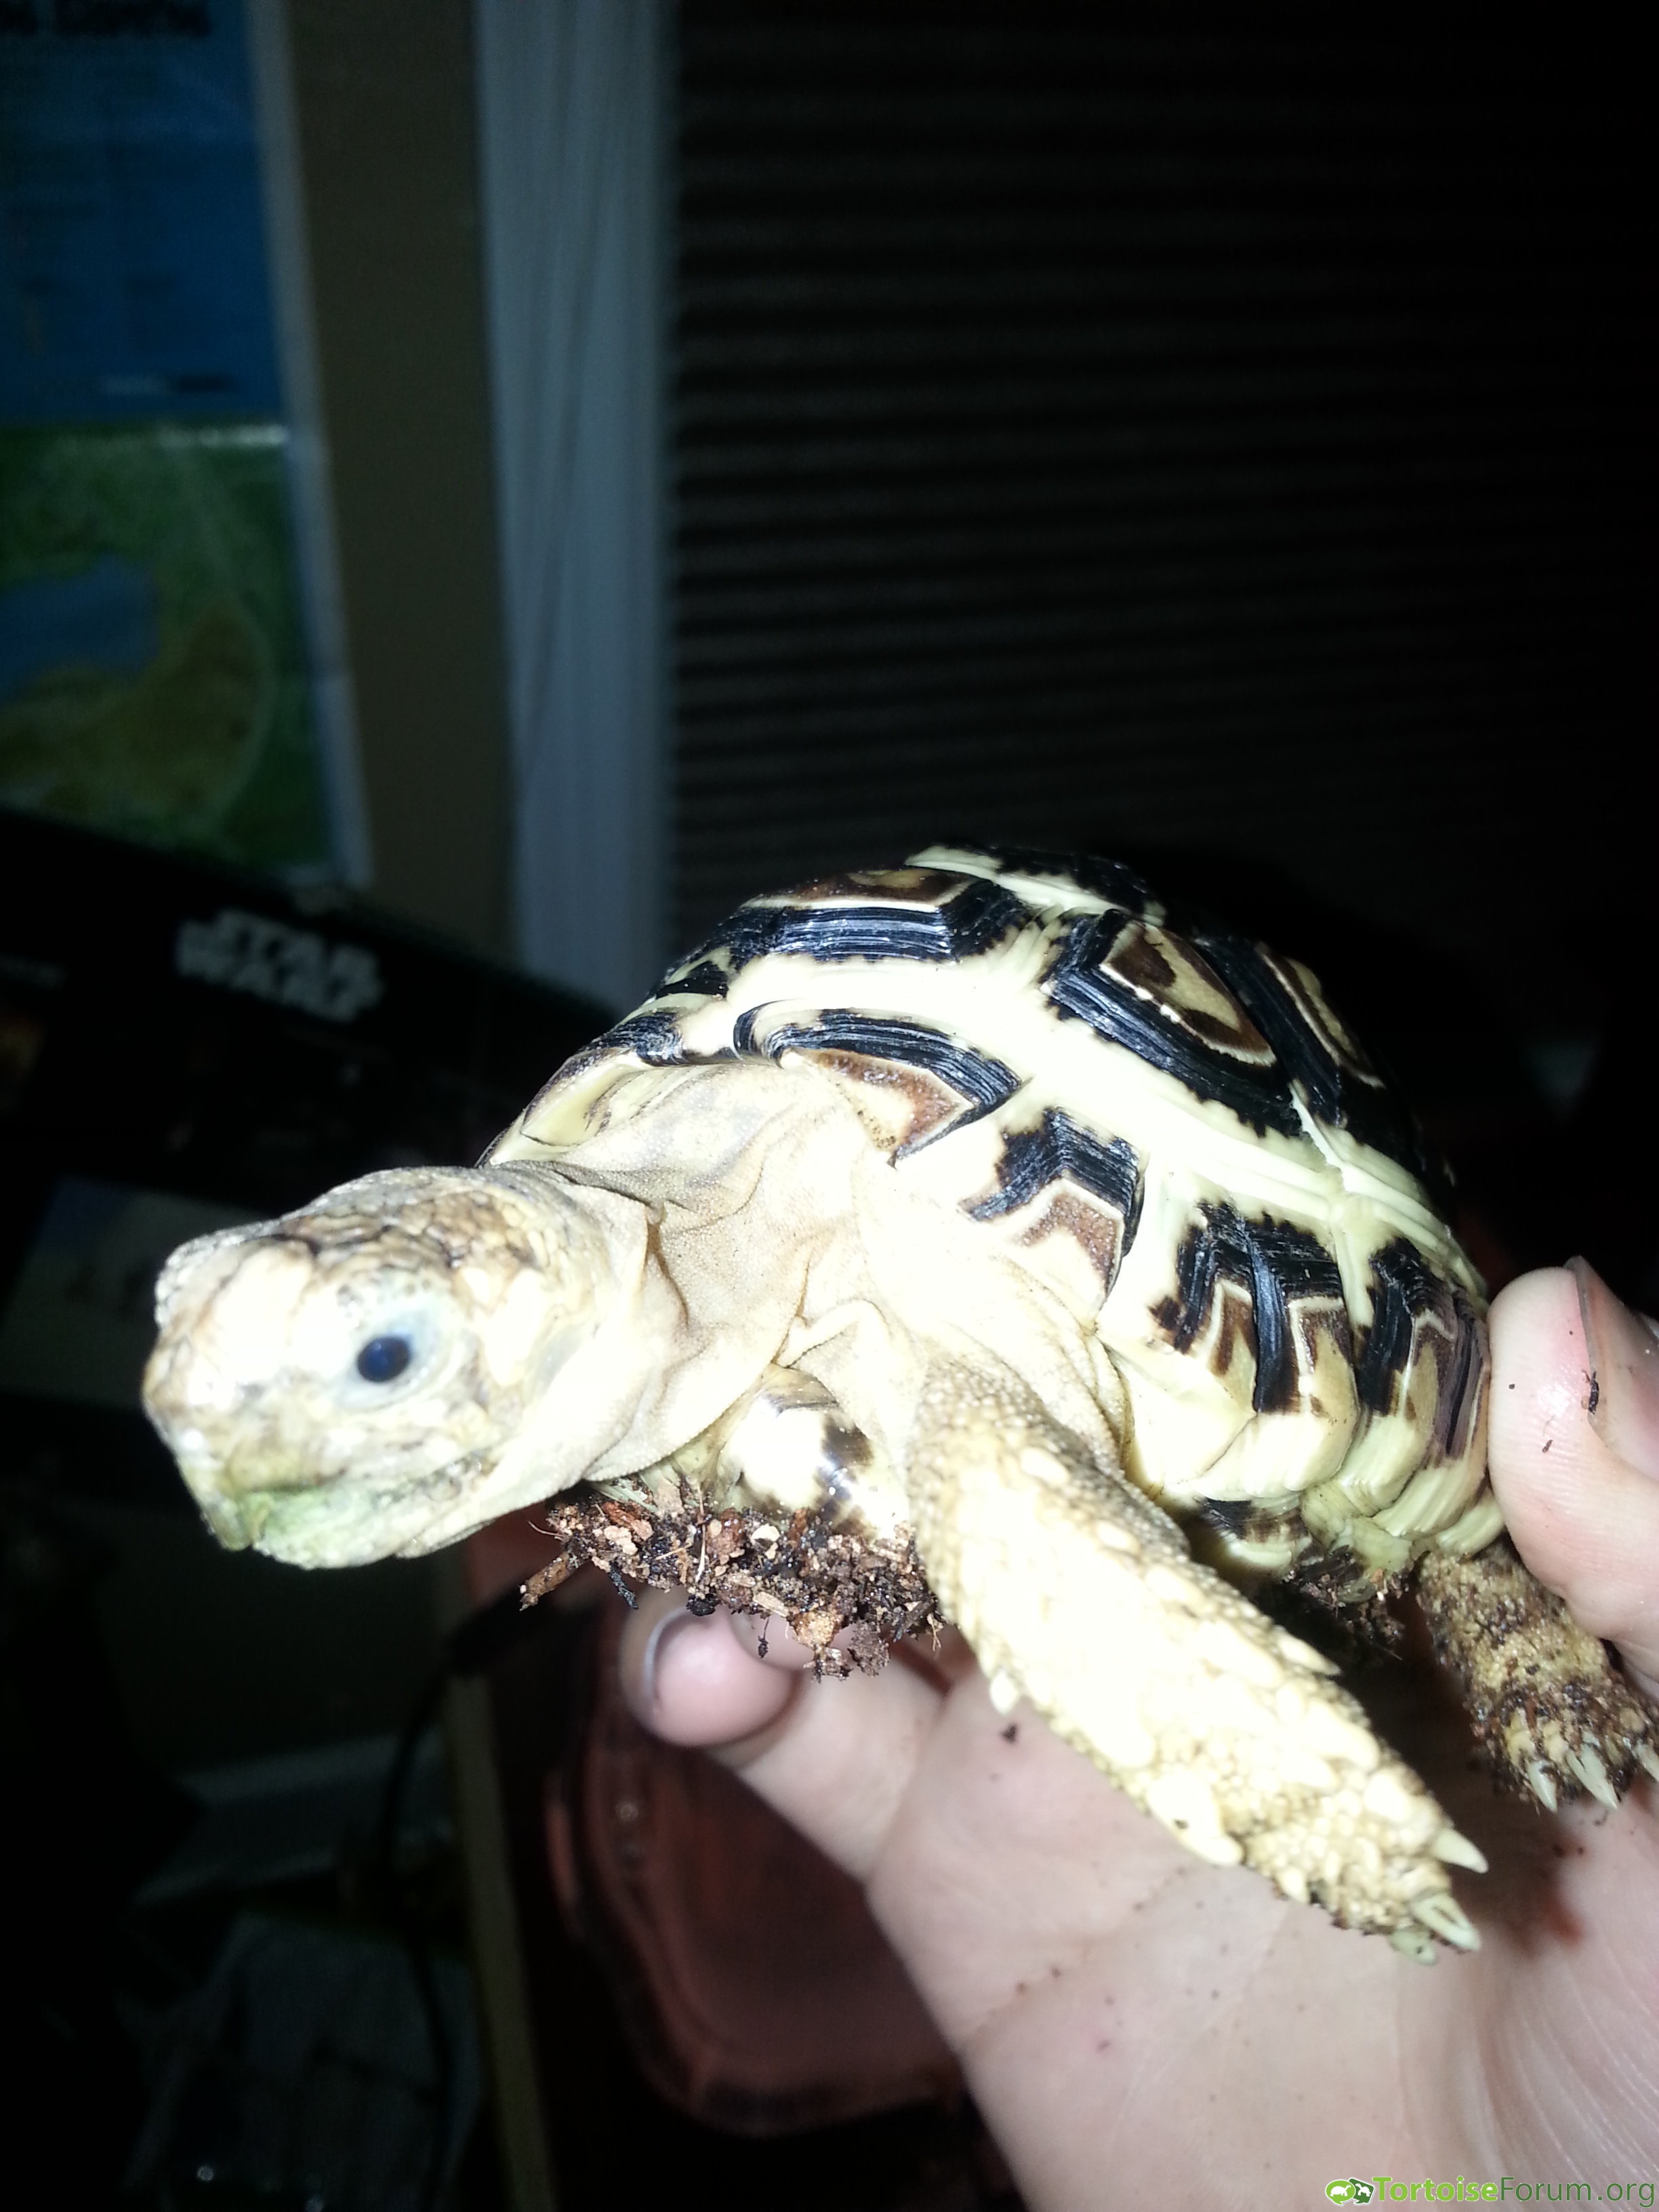 Petre, my first tortoise